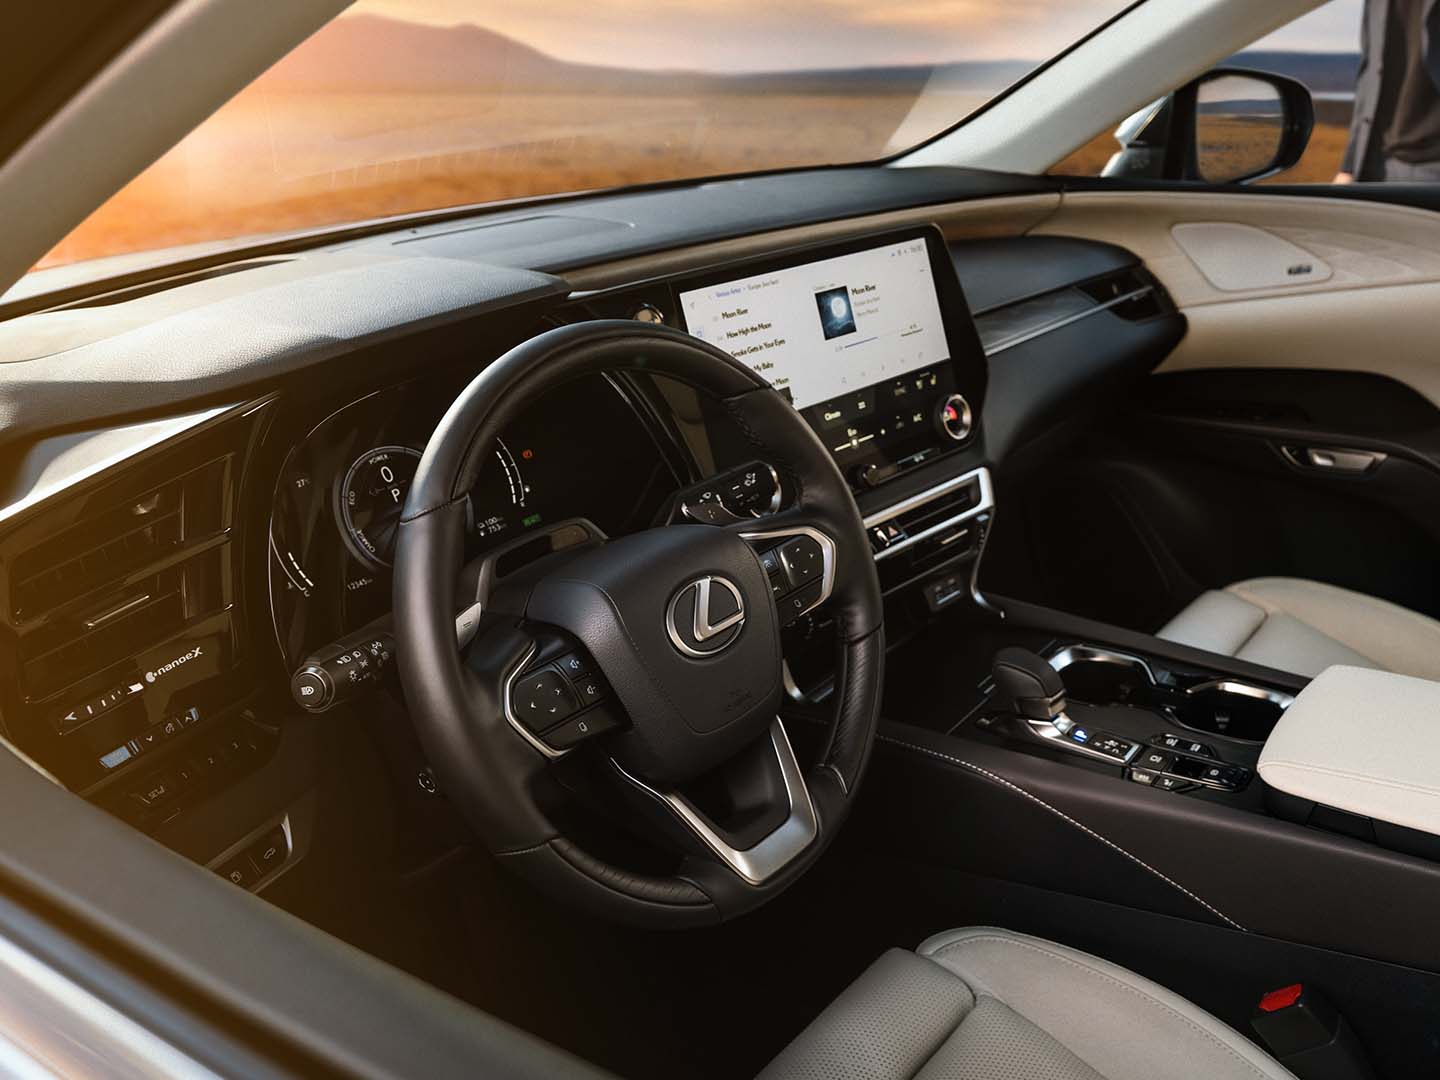 The cockpit of the Lexus RX